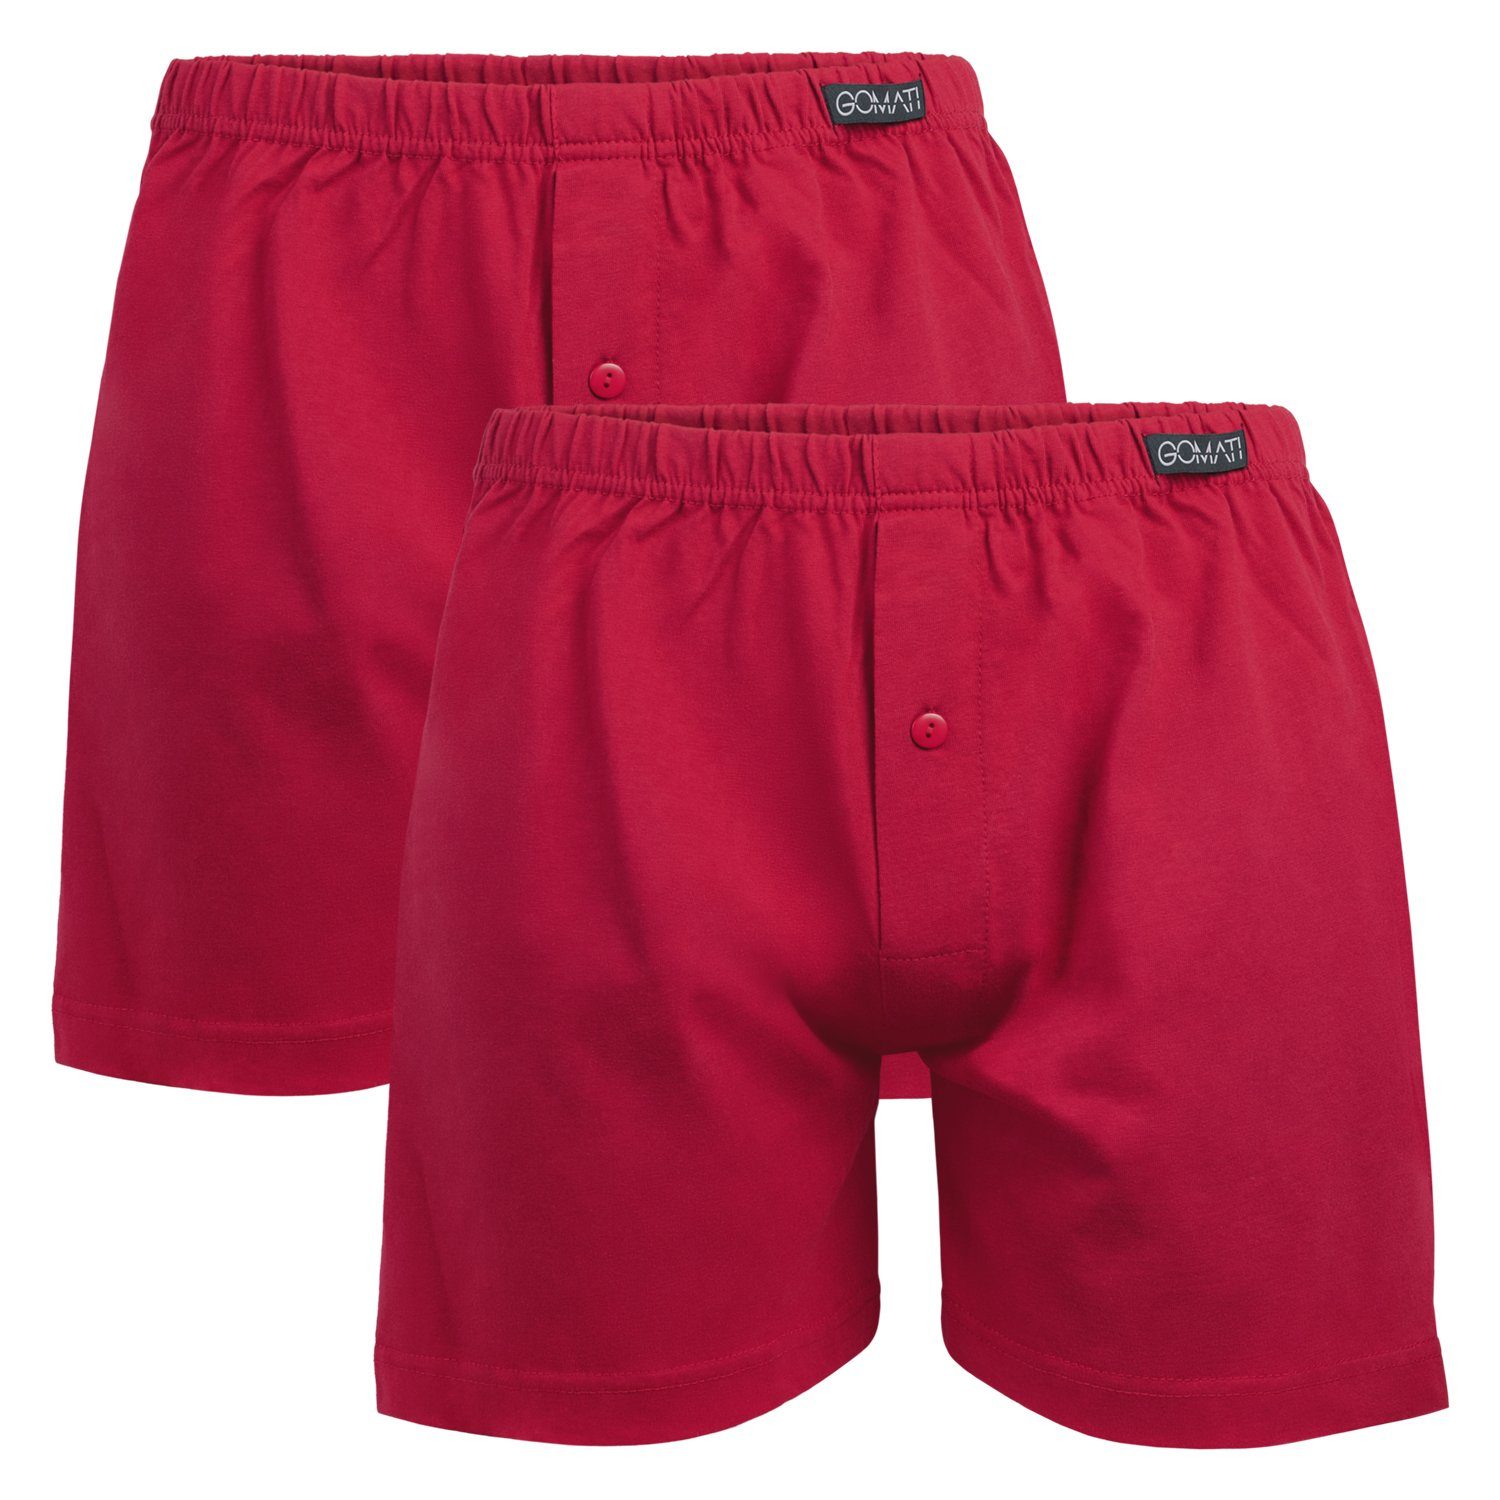 Gomati Boxershorts Herren Jersey Boxershorts Shorts (2er Stretch Pack) Baumwolle aus Deep Red